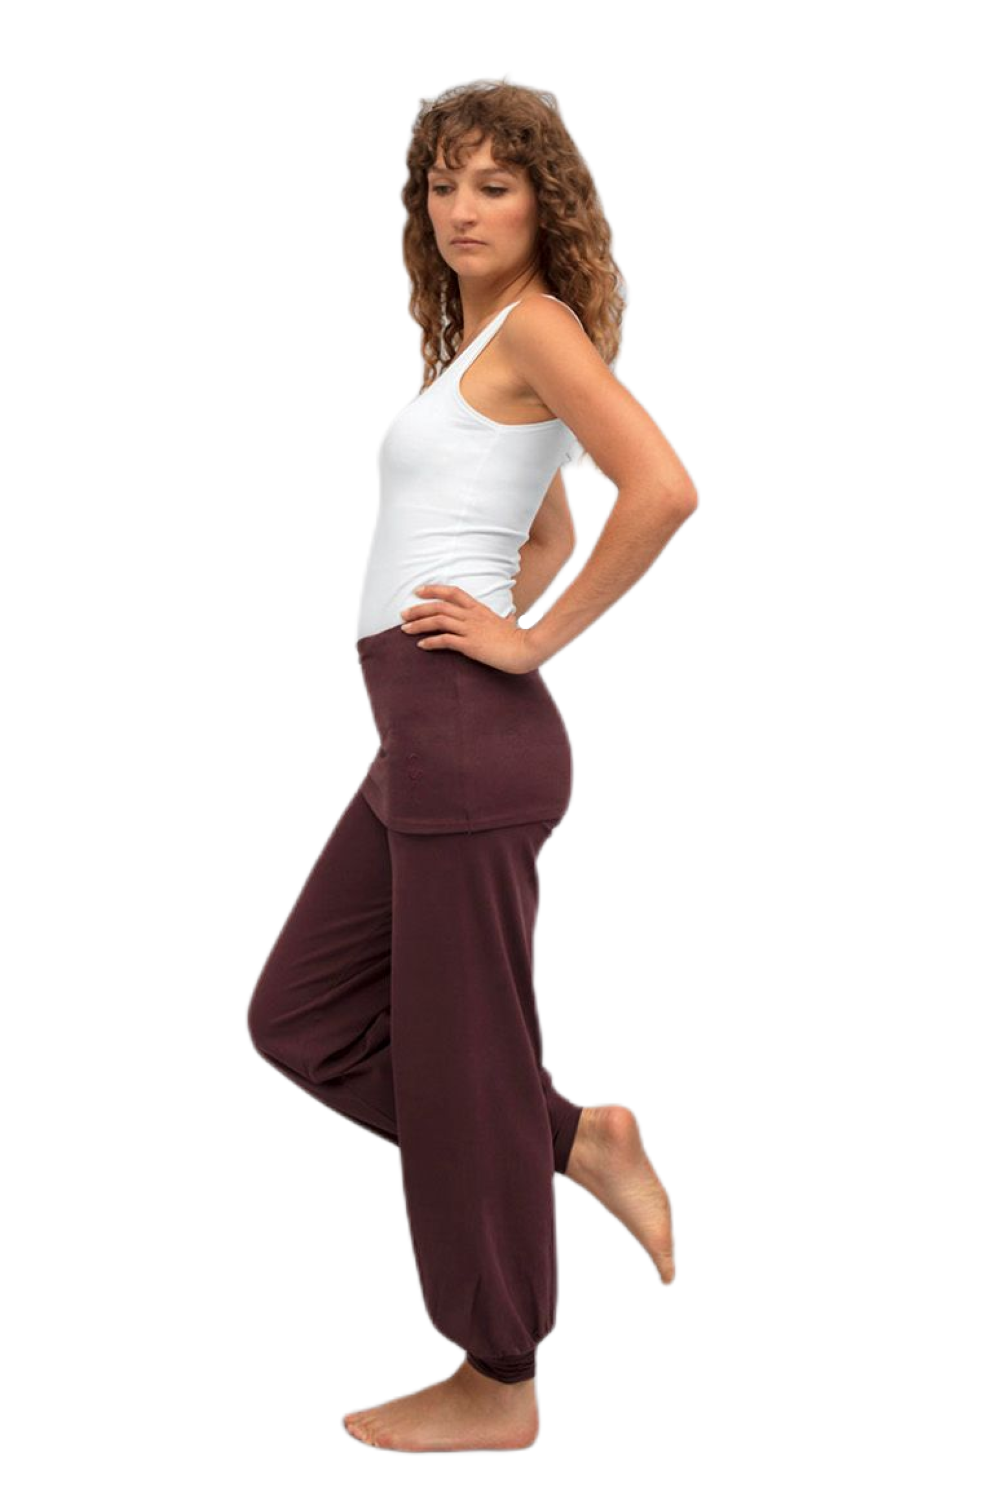 Yoga pants sohang 